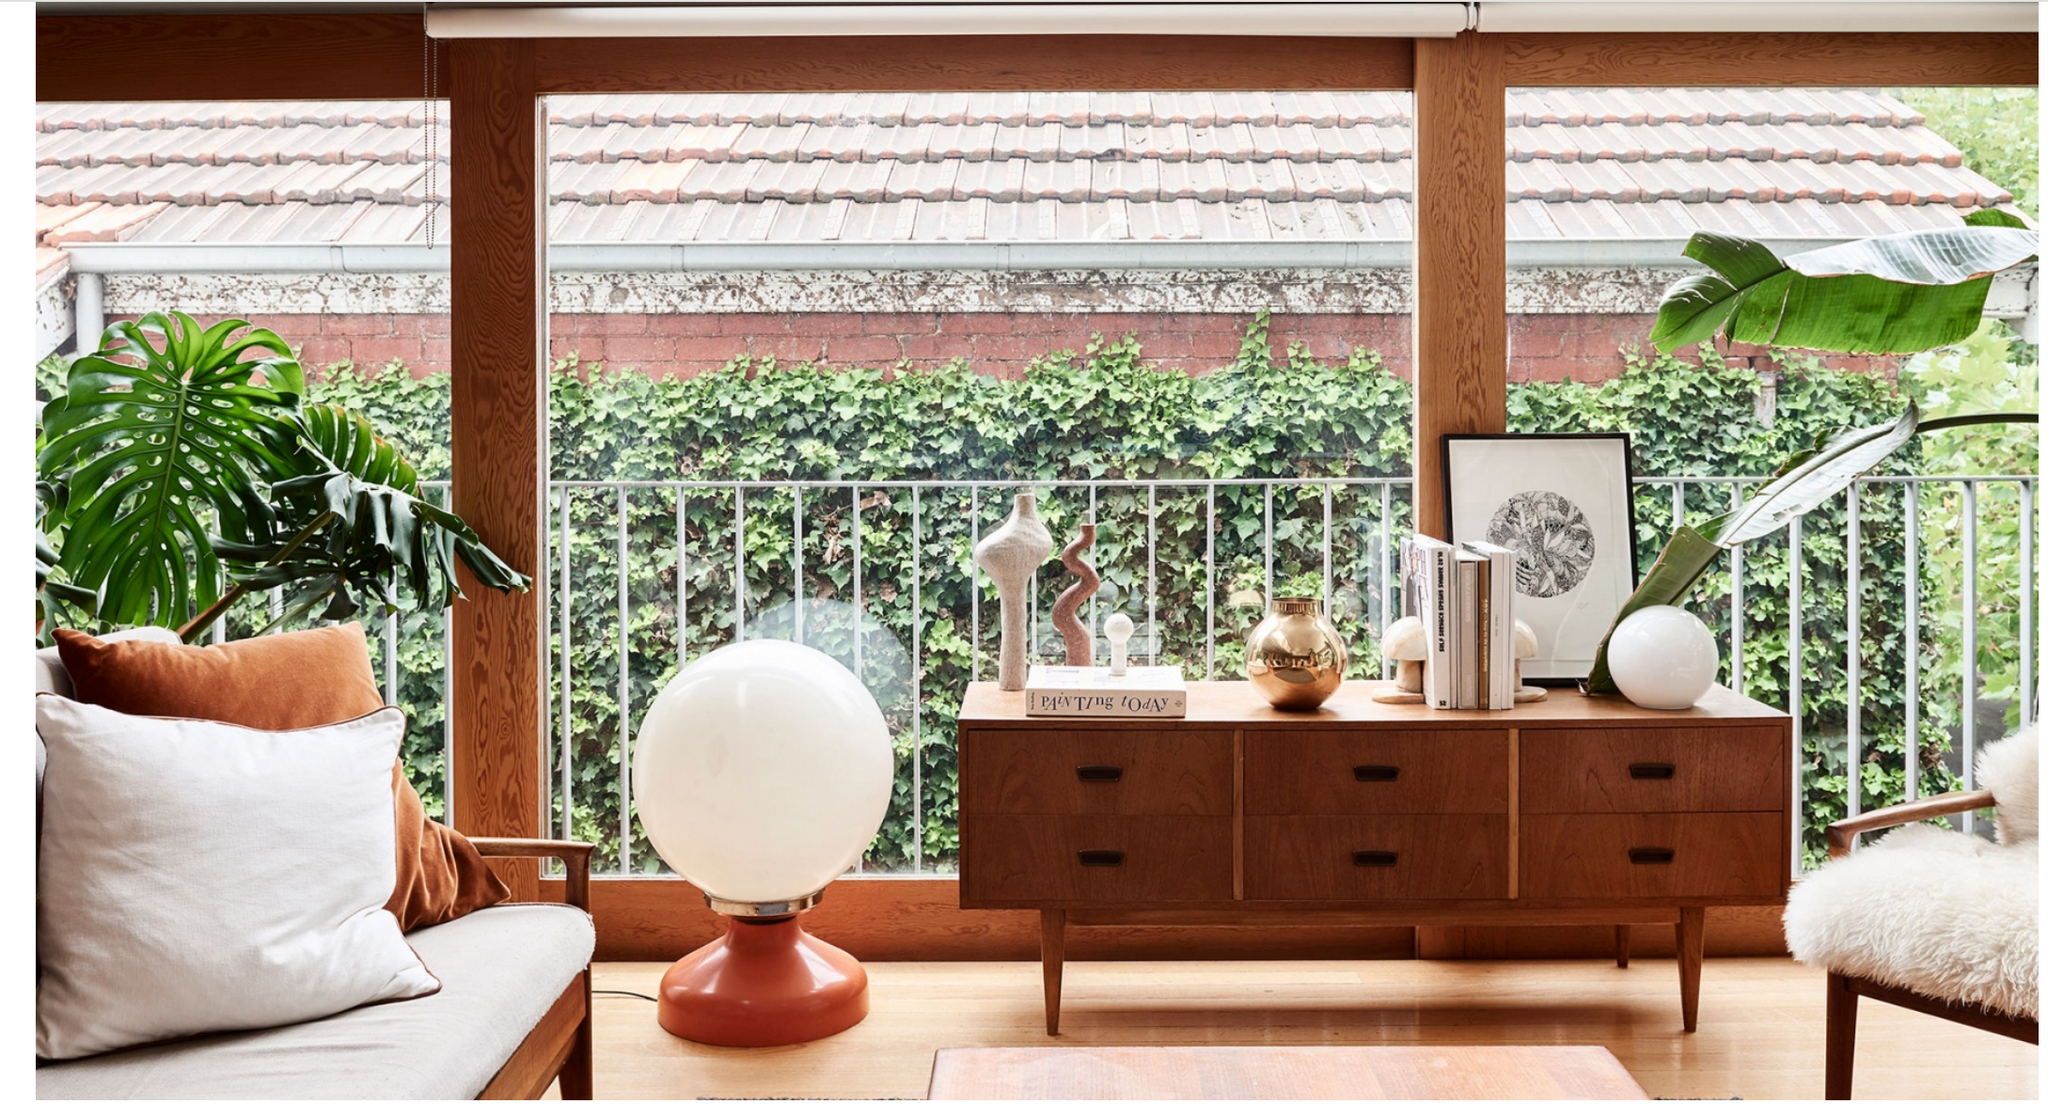 Illustrator Kelly Thompson home interior design The Design Files Melbourne